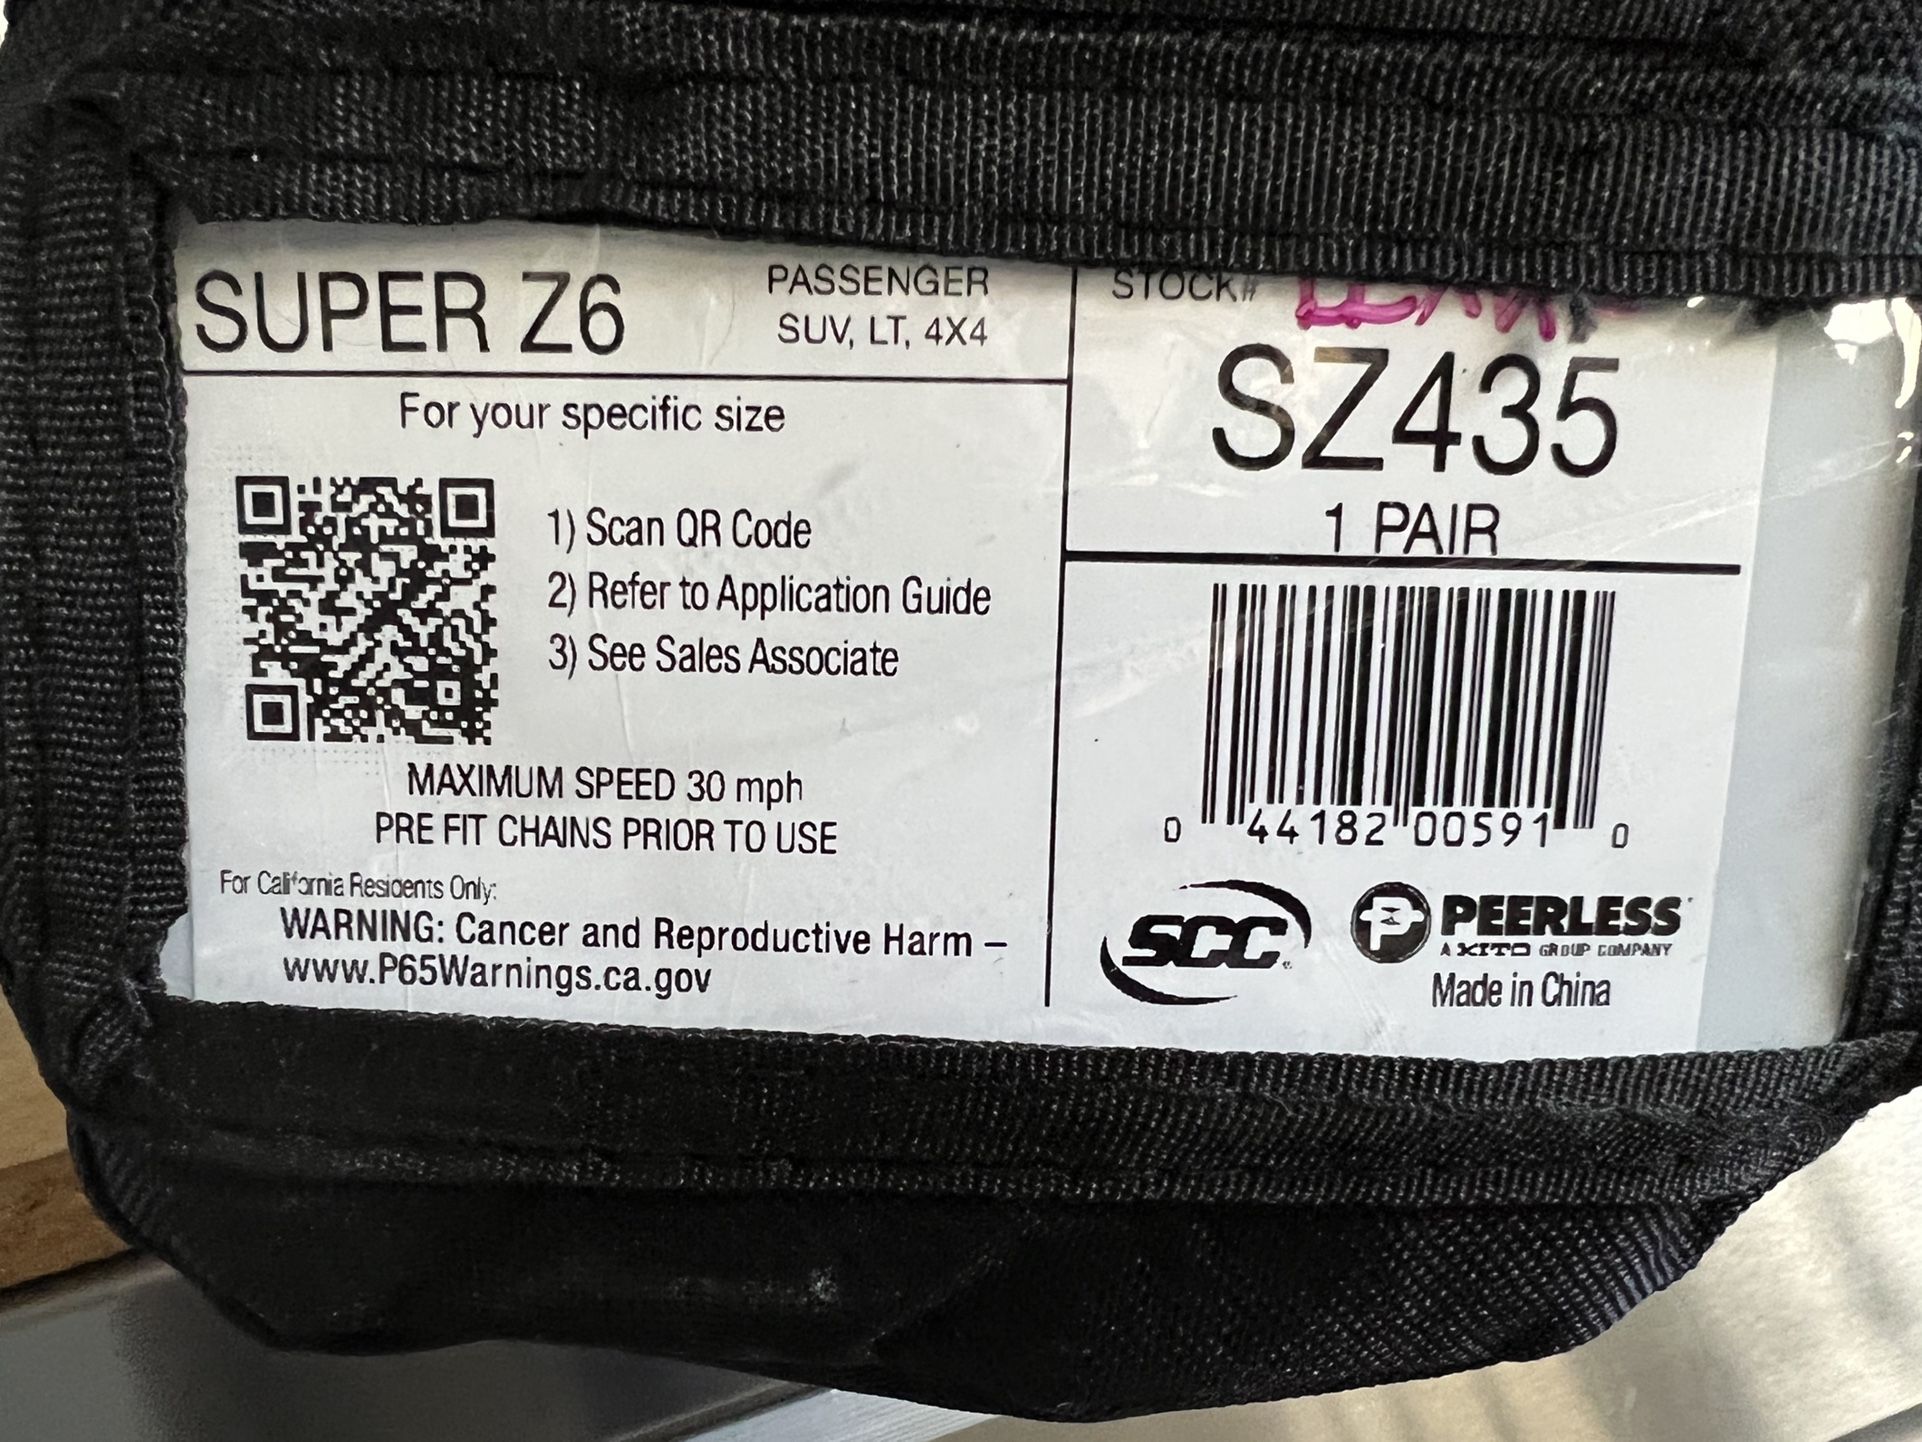 Snow Chain SZ435 (Peerless SCC Super Z6) for Sale in Chula Vista, CA ...